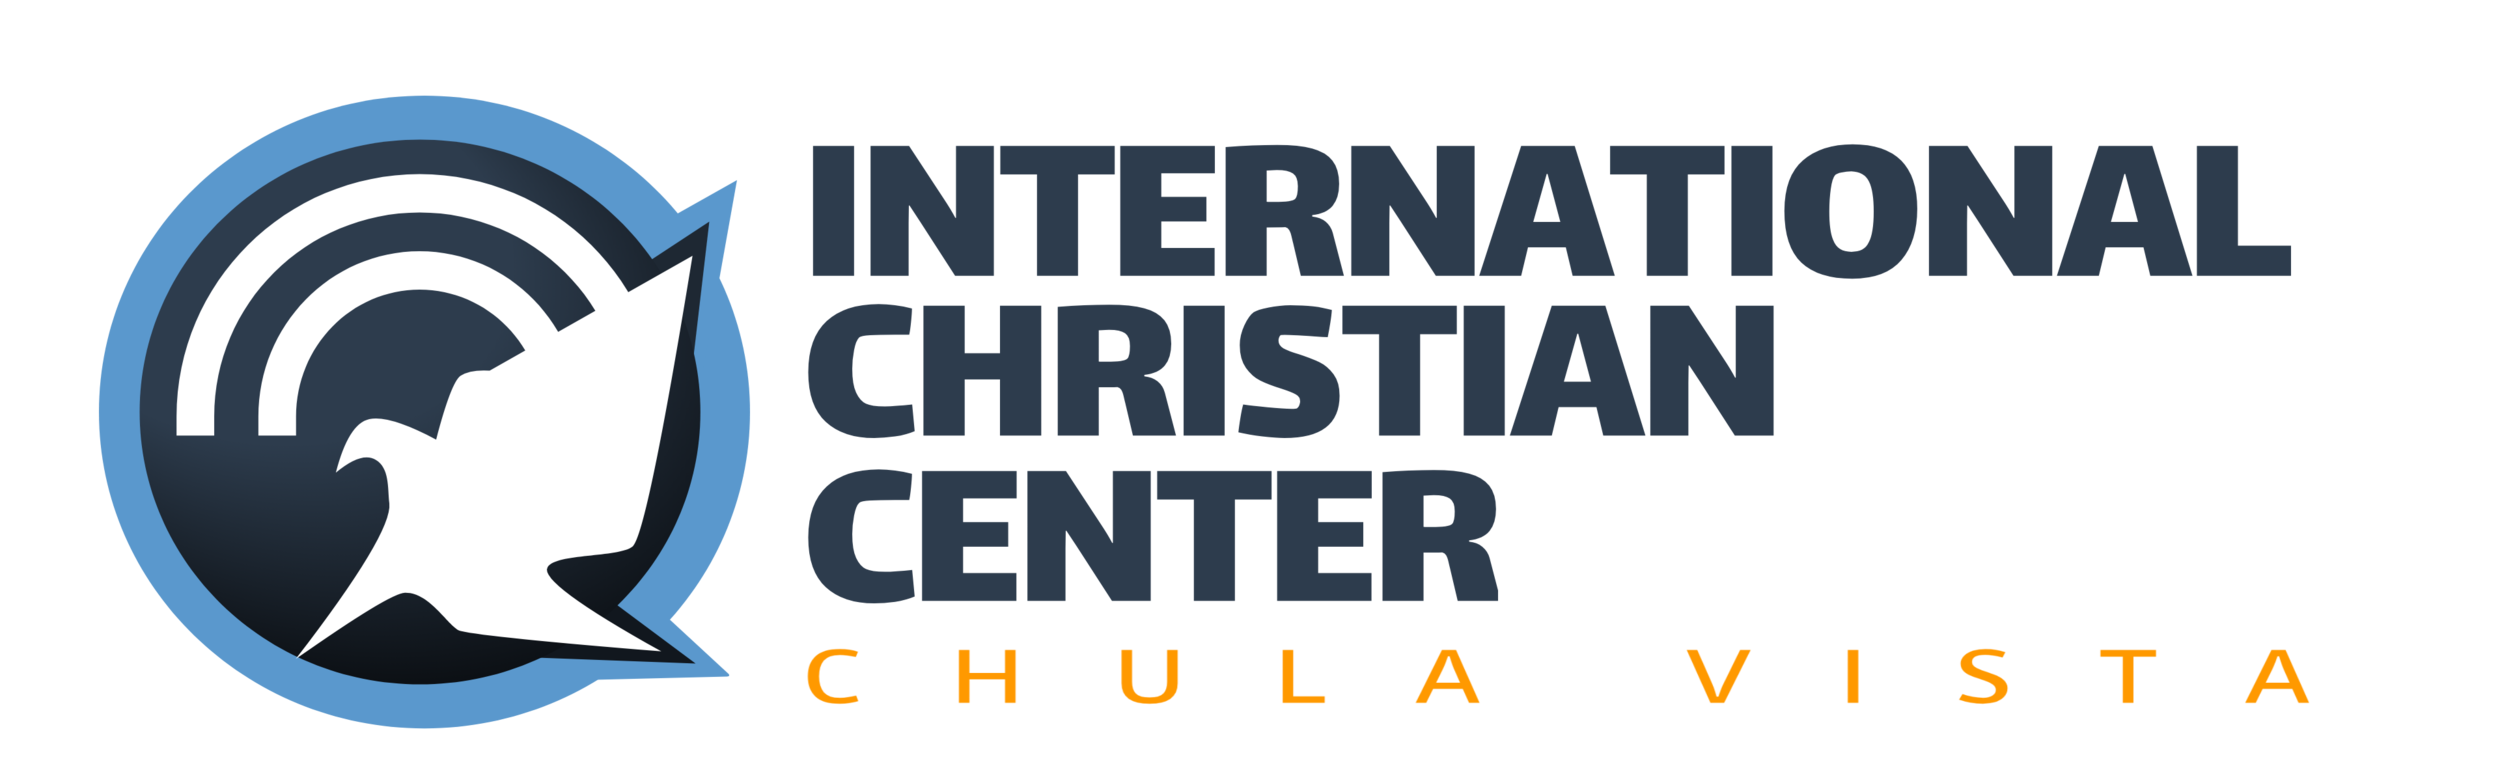 International Christian Center - Chula Vista